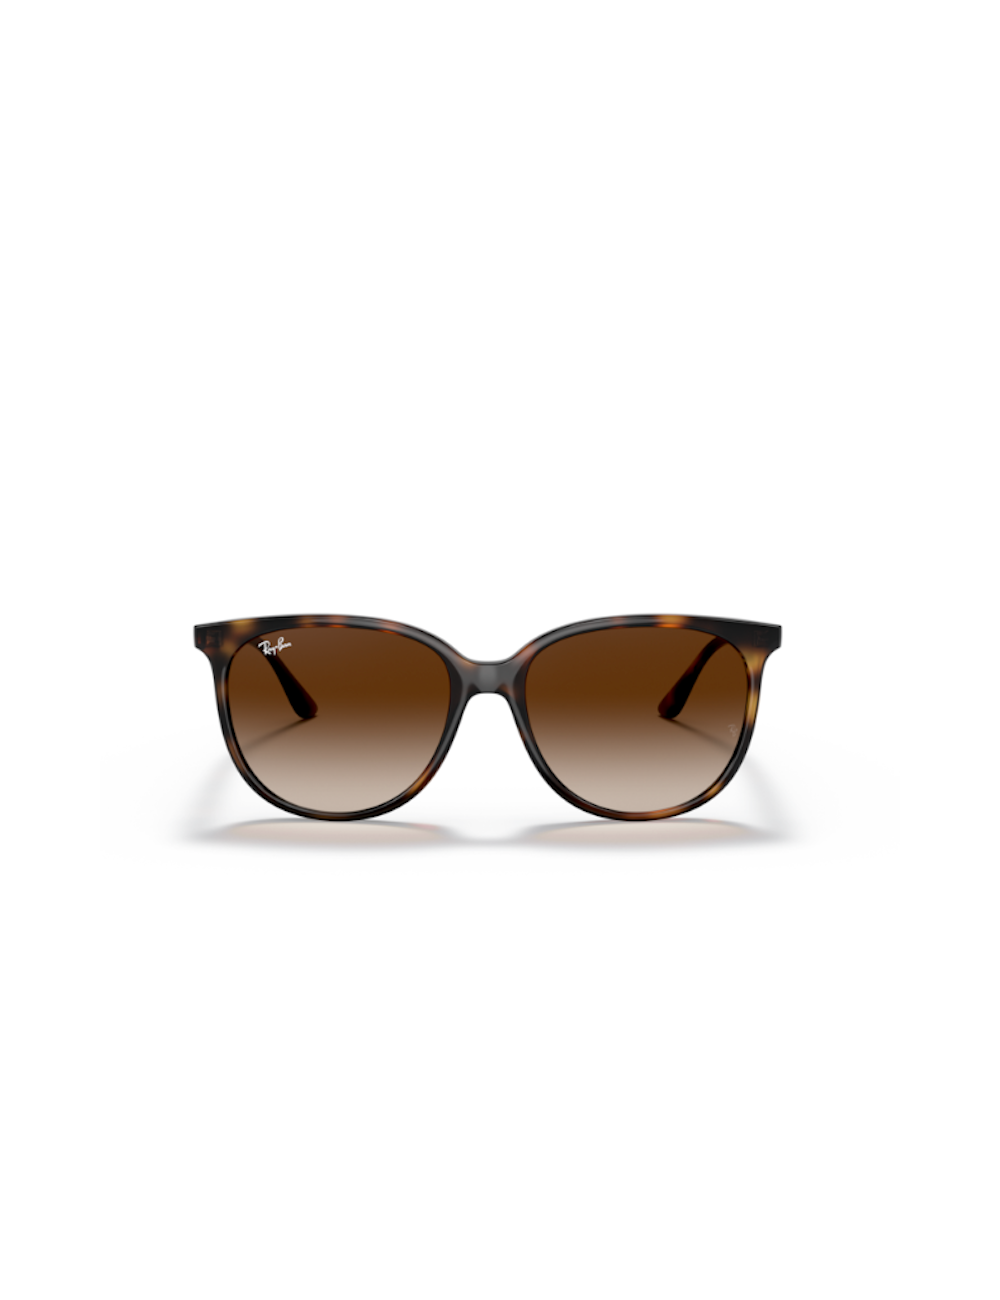 Ray Ban RB4378 710/13 sunglasses for women – Ottica Mauro